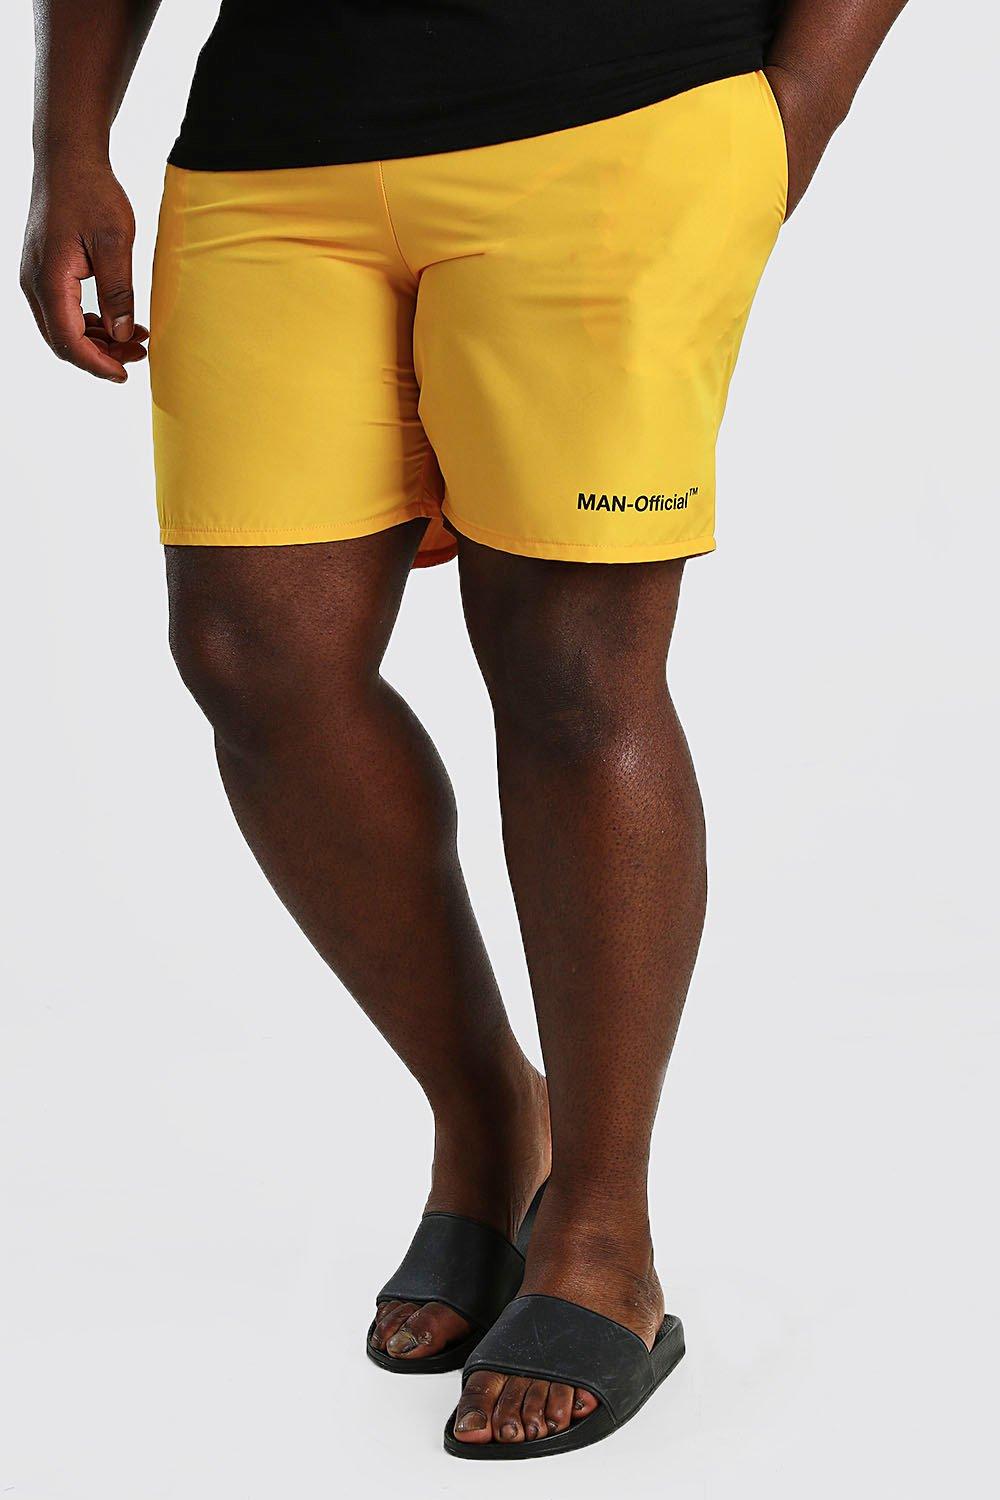 yellow shorts plus size